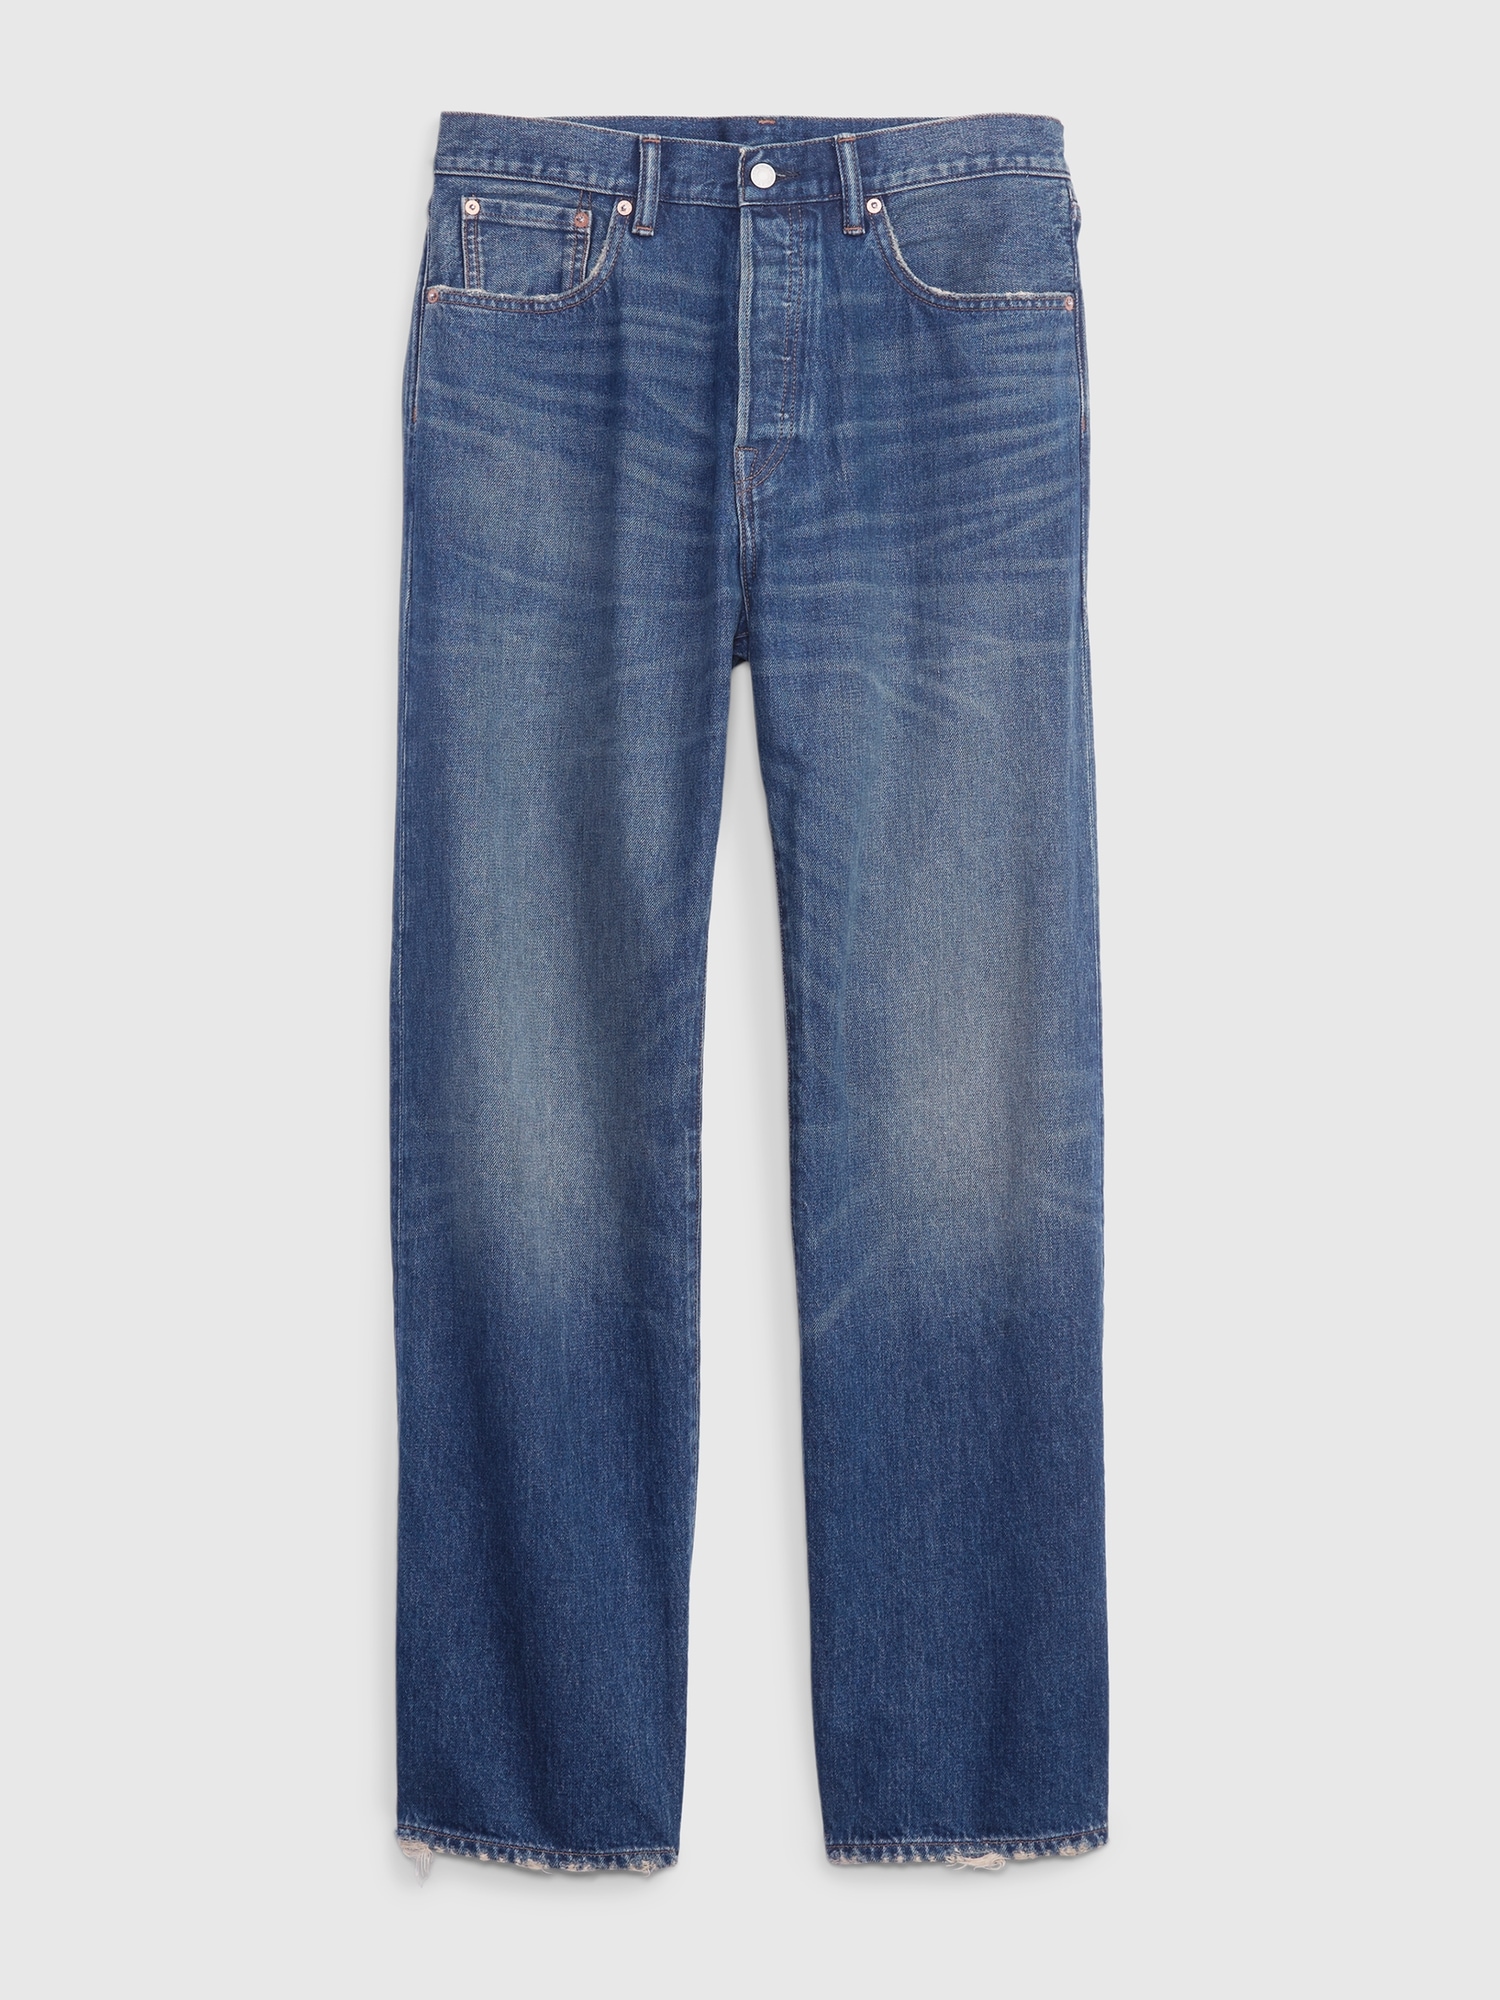 Amazon.com: WIYOSHY Boys' Denim Jeans Elastic Waist Pants for Kids 3-12  Years (Blue, 6): Clothing, Shoes & Jewelry